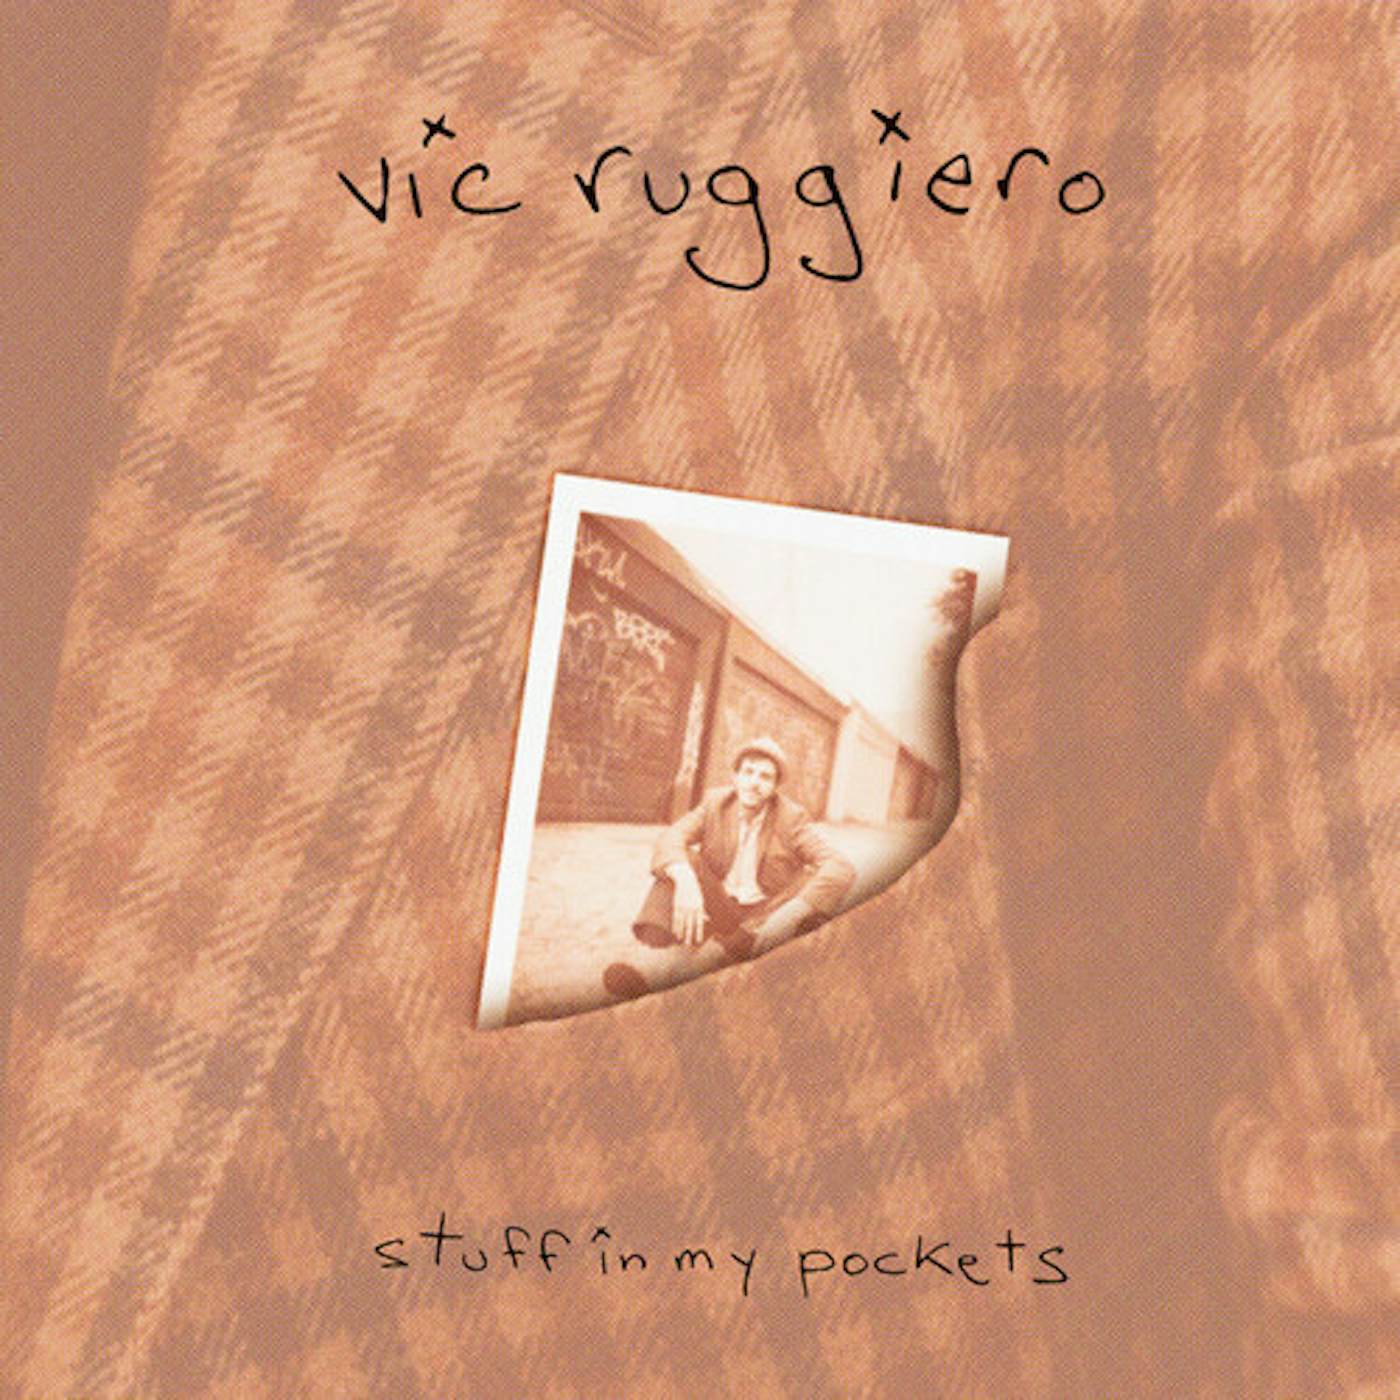 Vic Ruggiero Stuff in My Pockets Vinyl Record